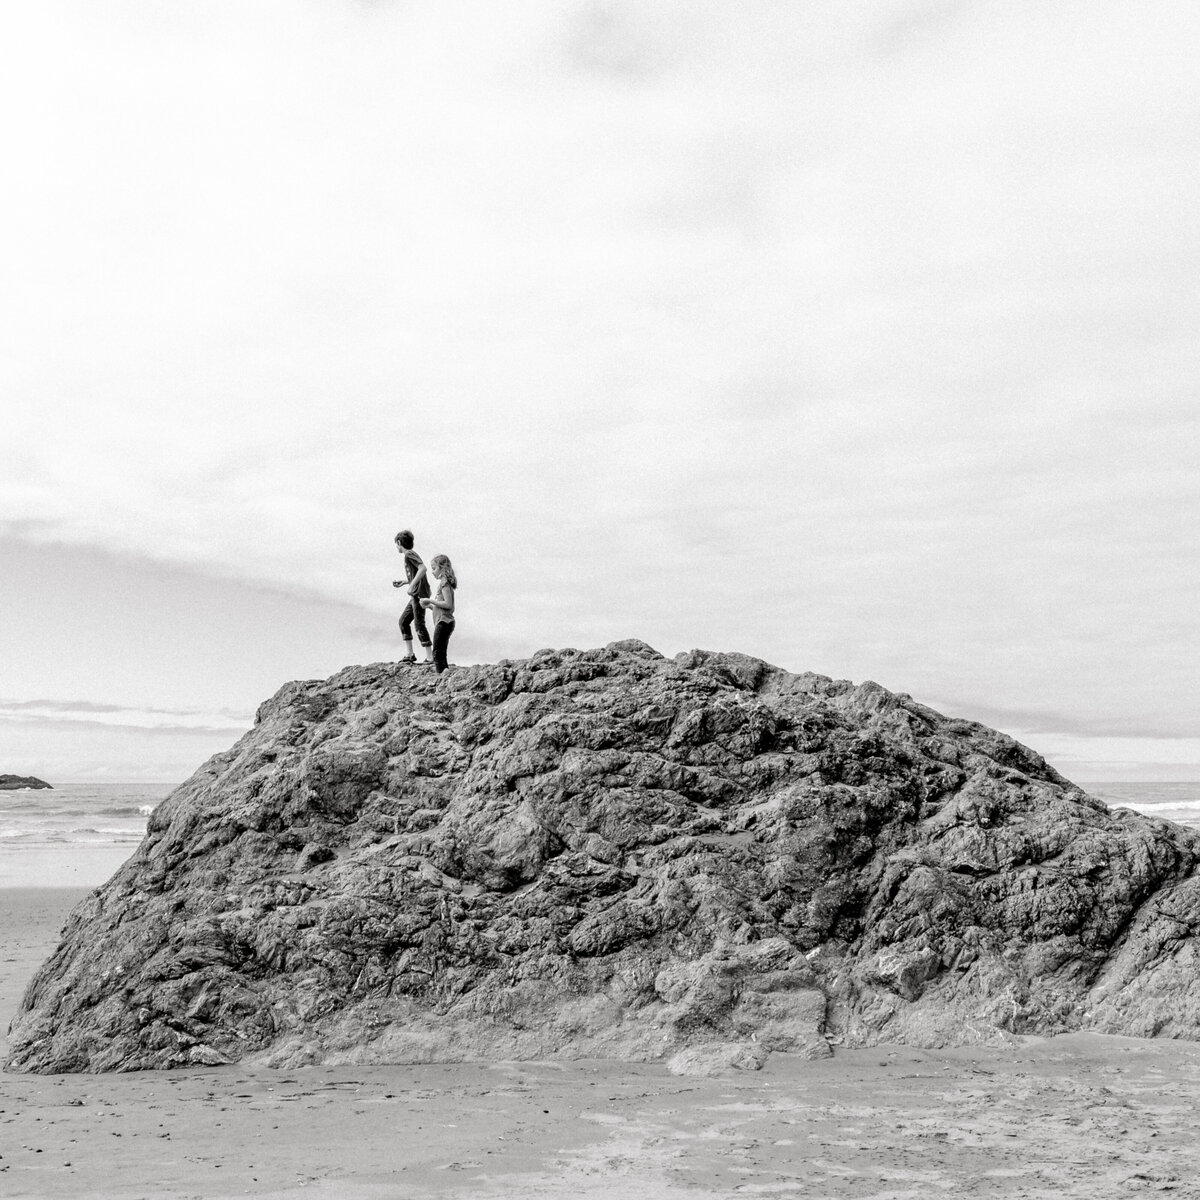 children climbing rocks on the beach in Bandon